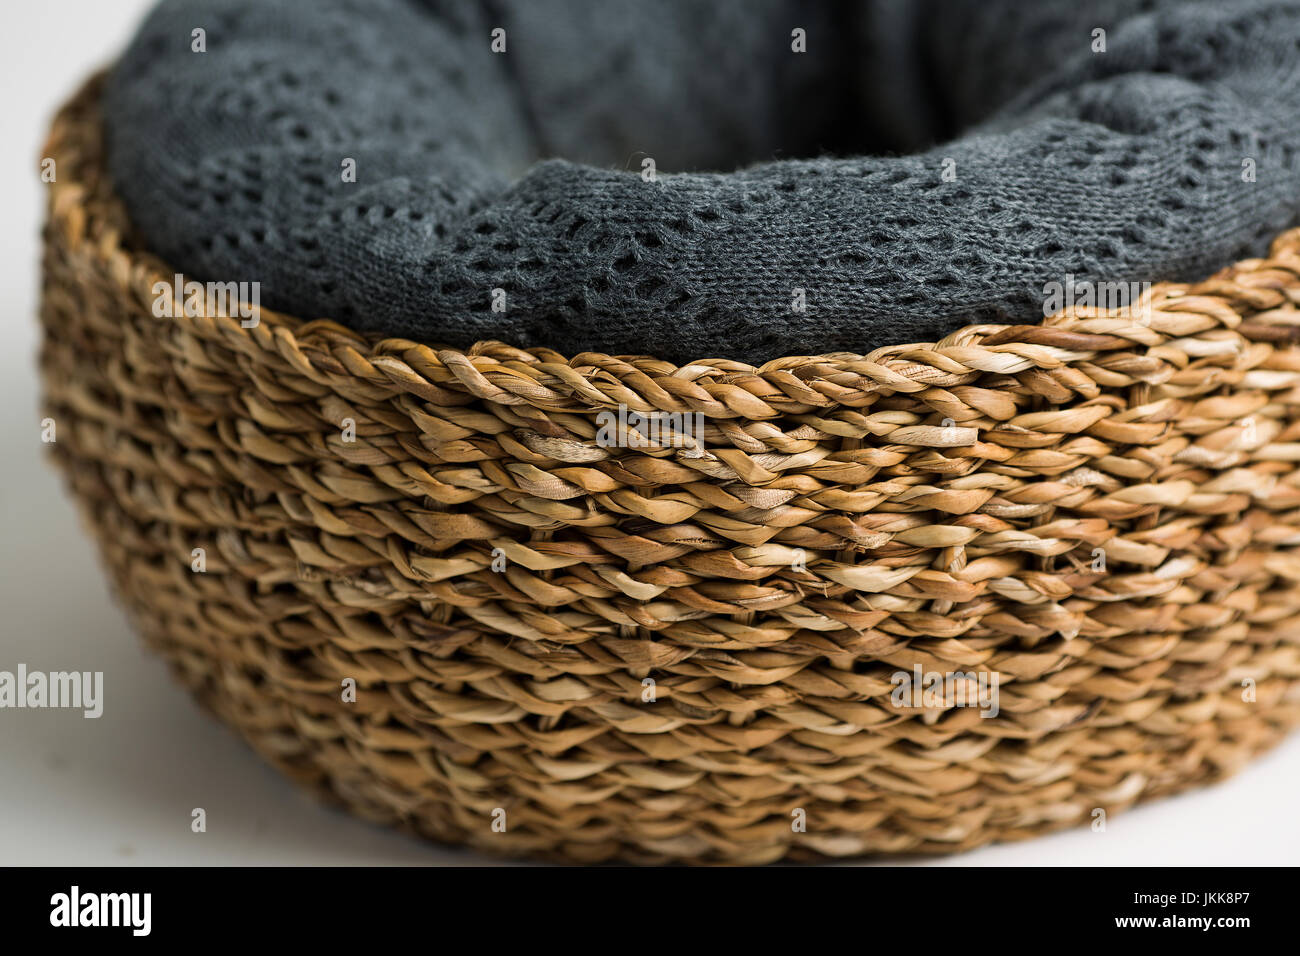 Empty wicker basket isolated on white Stock Photo